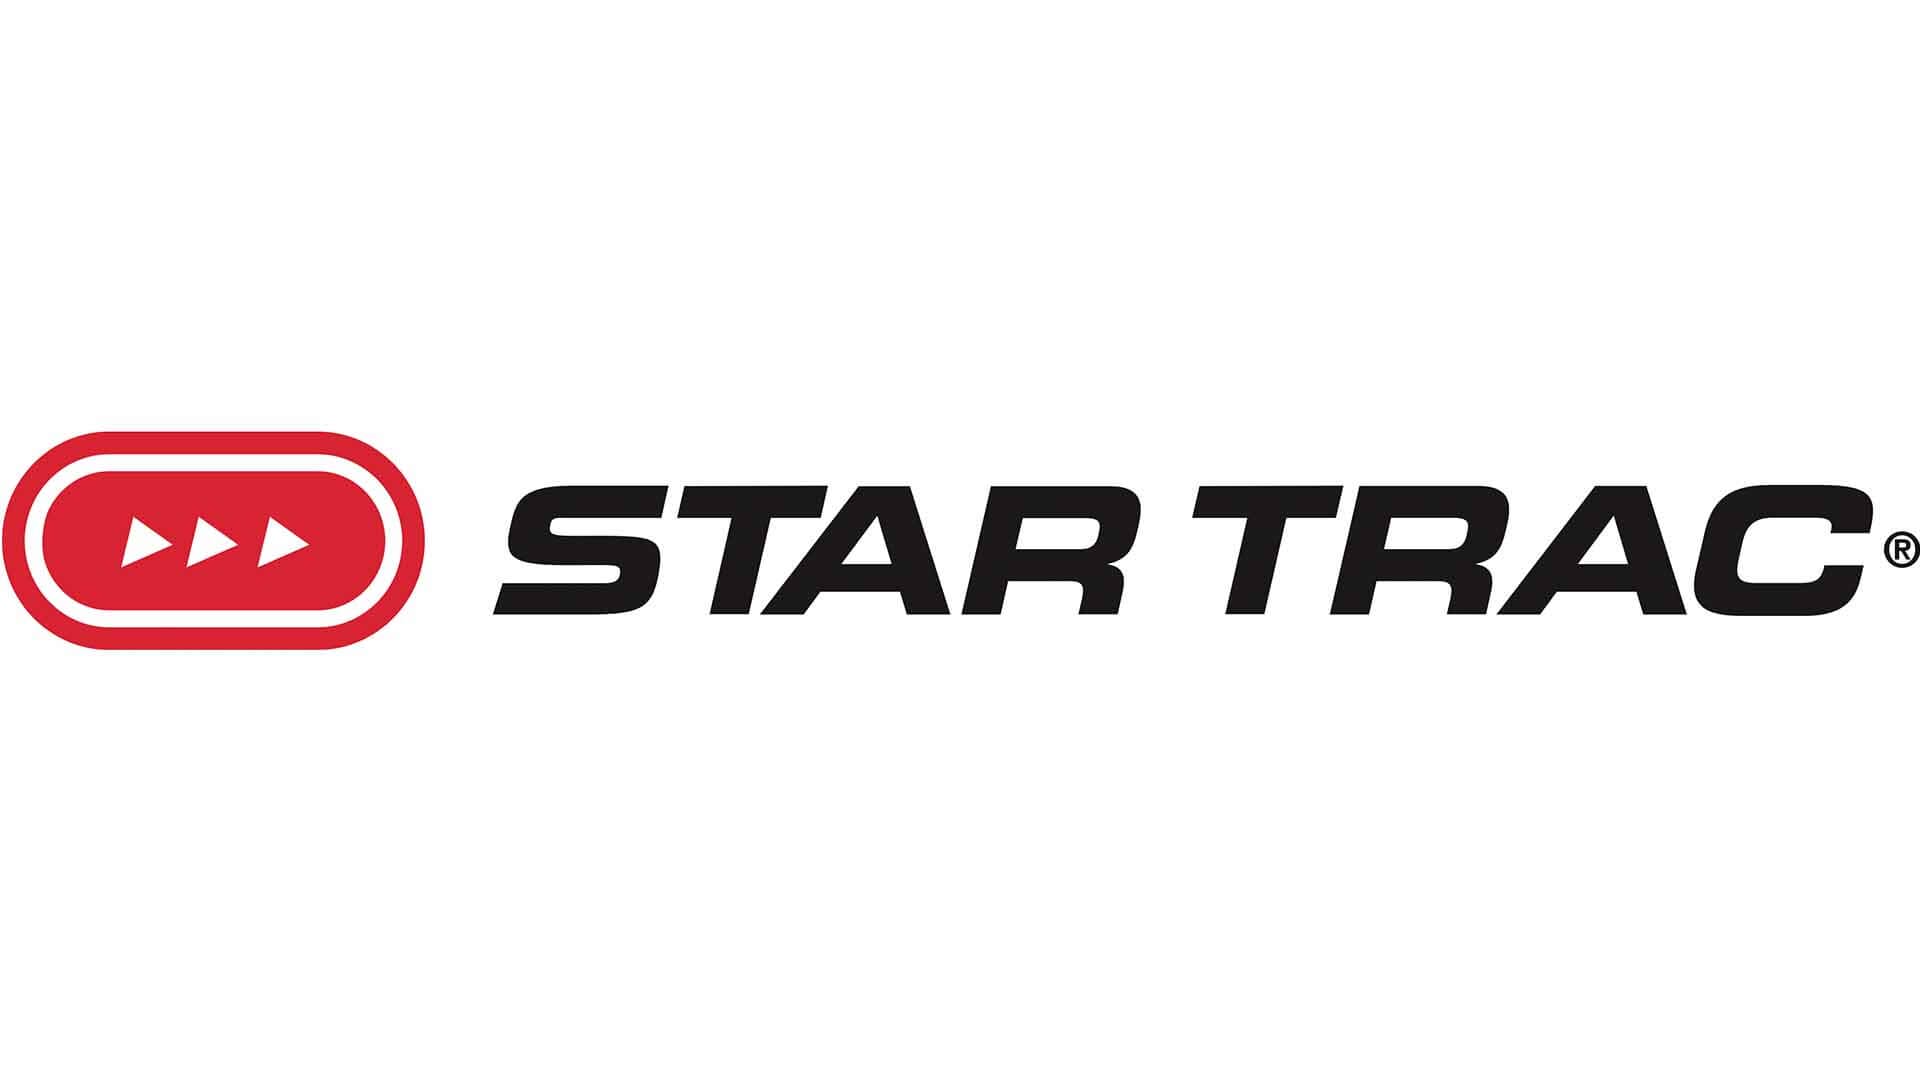 A star trek logo is shown.